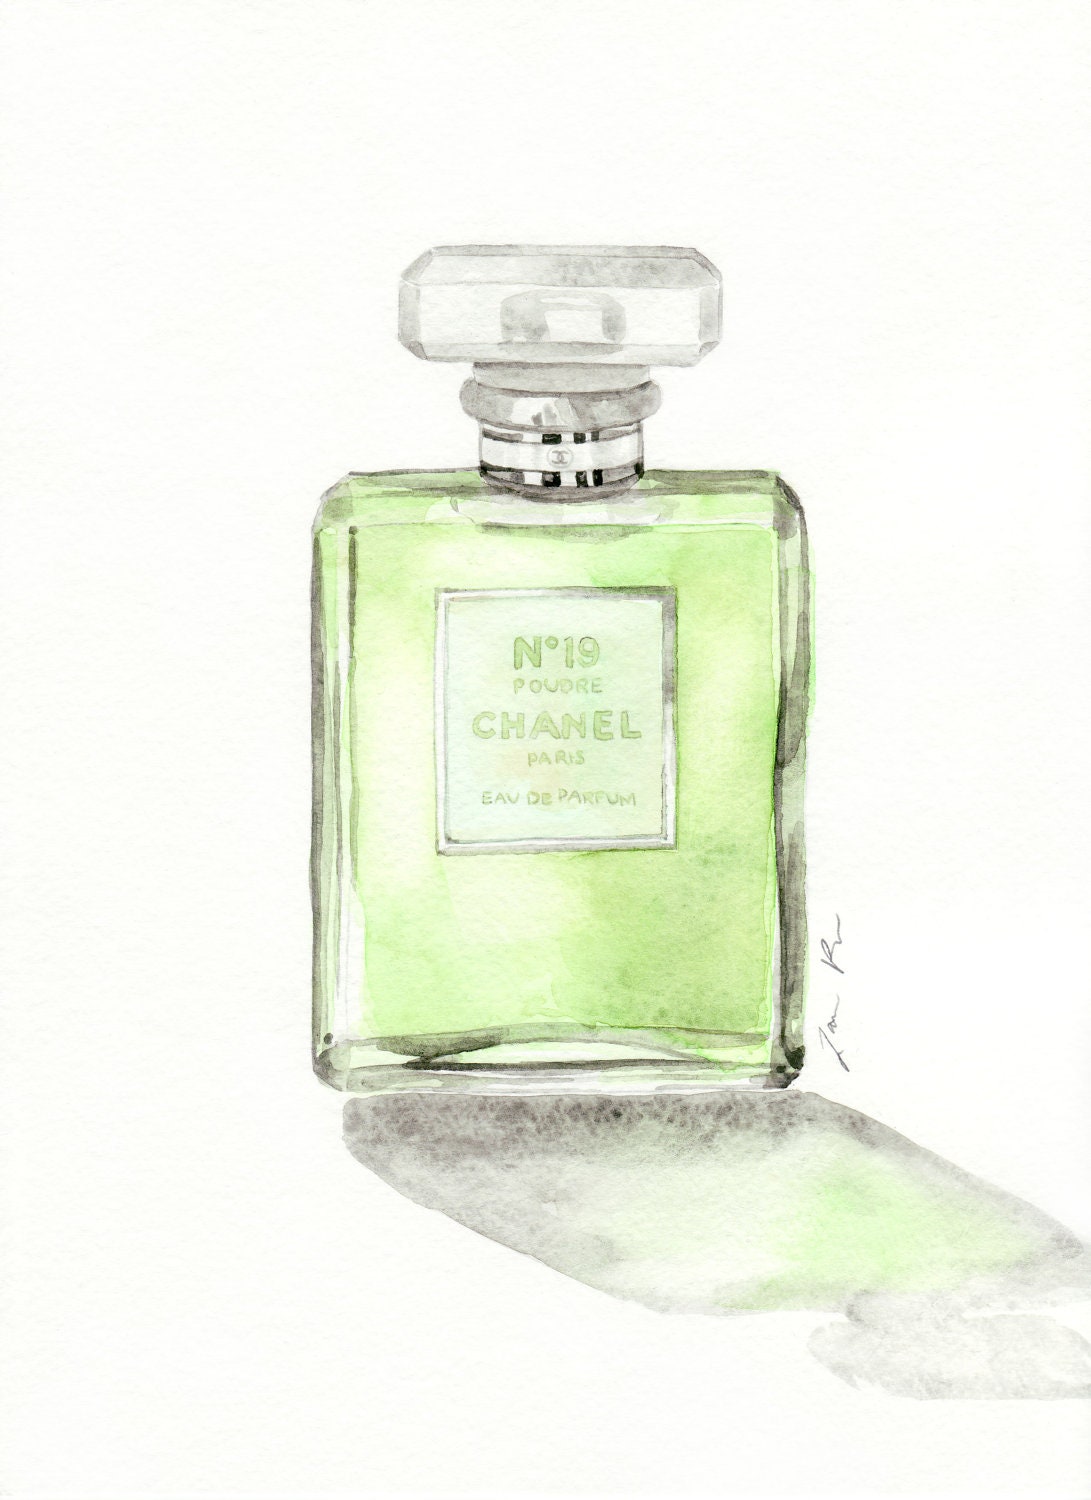 Chanel Perfume Bottle No. 19 Glass ORIGINAL by LauraRowStudio